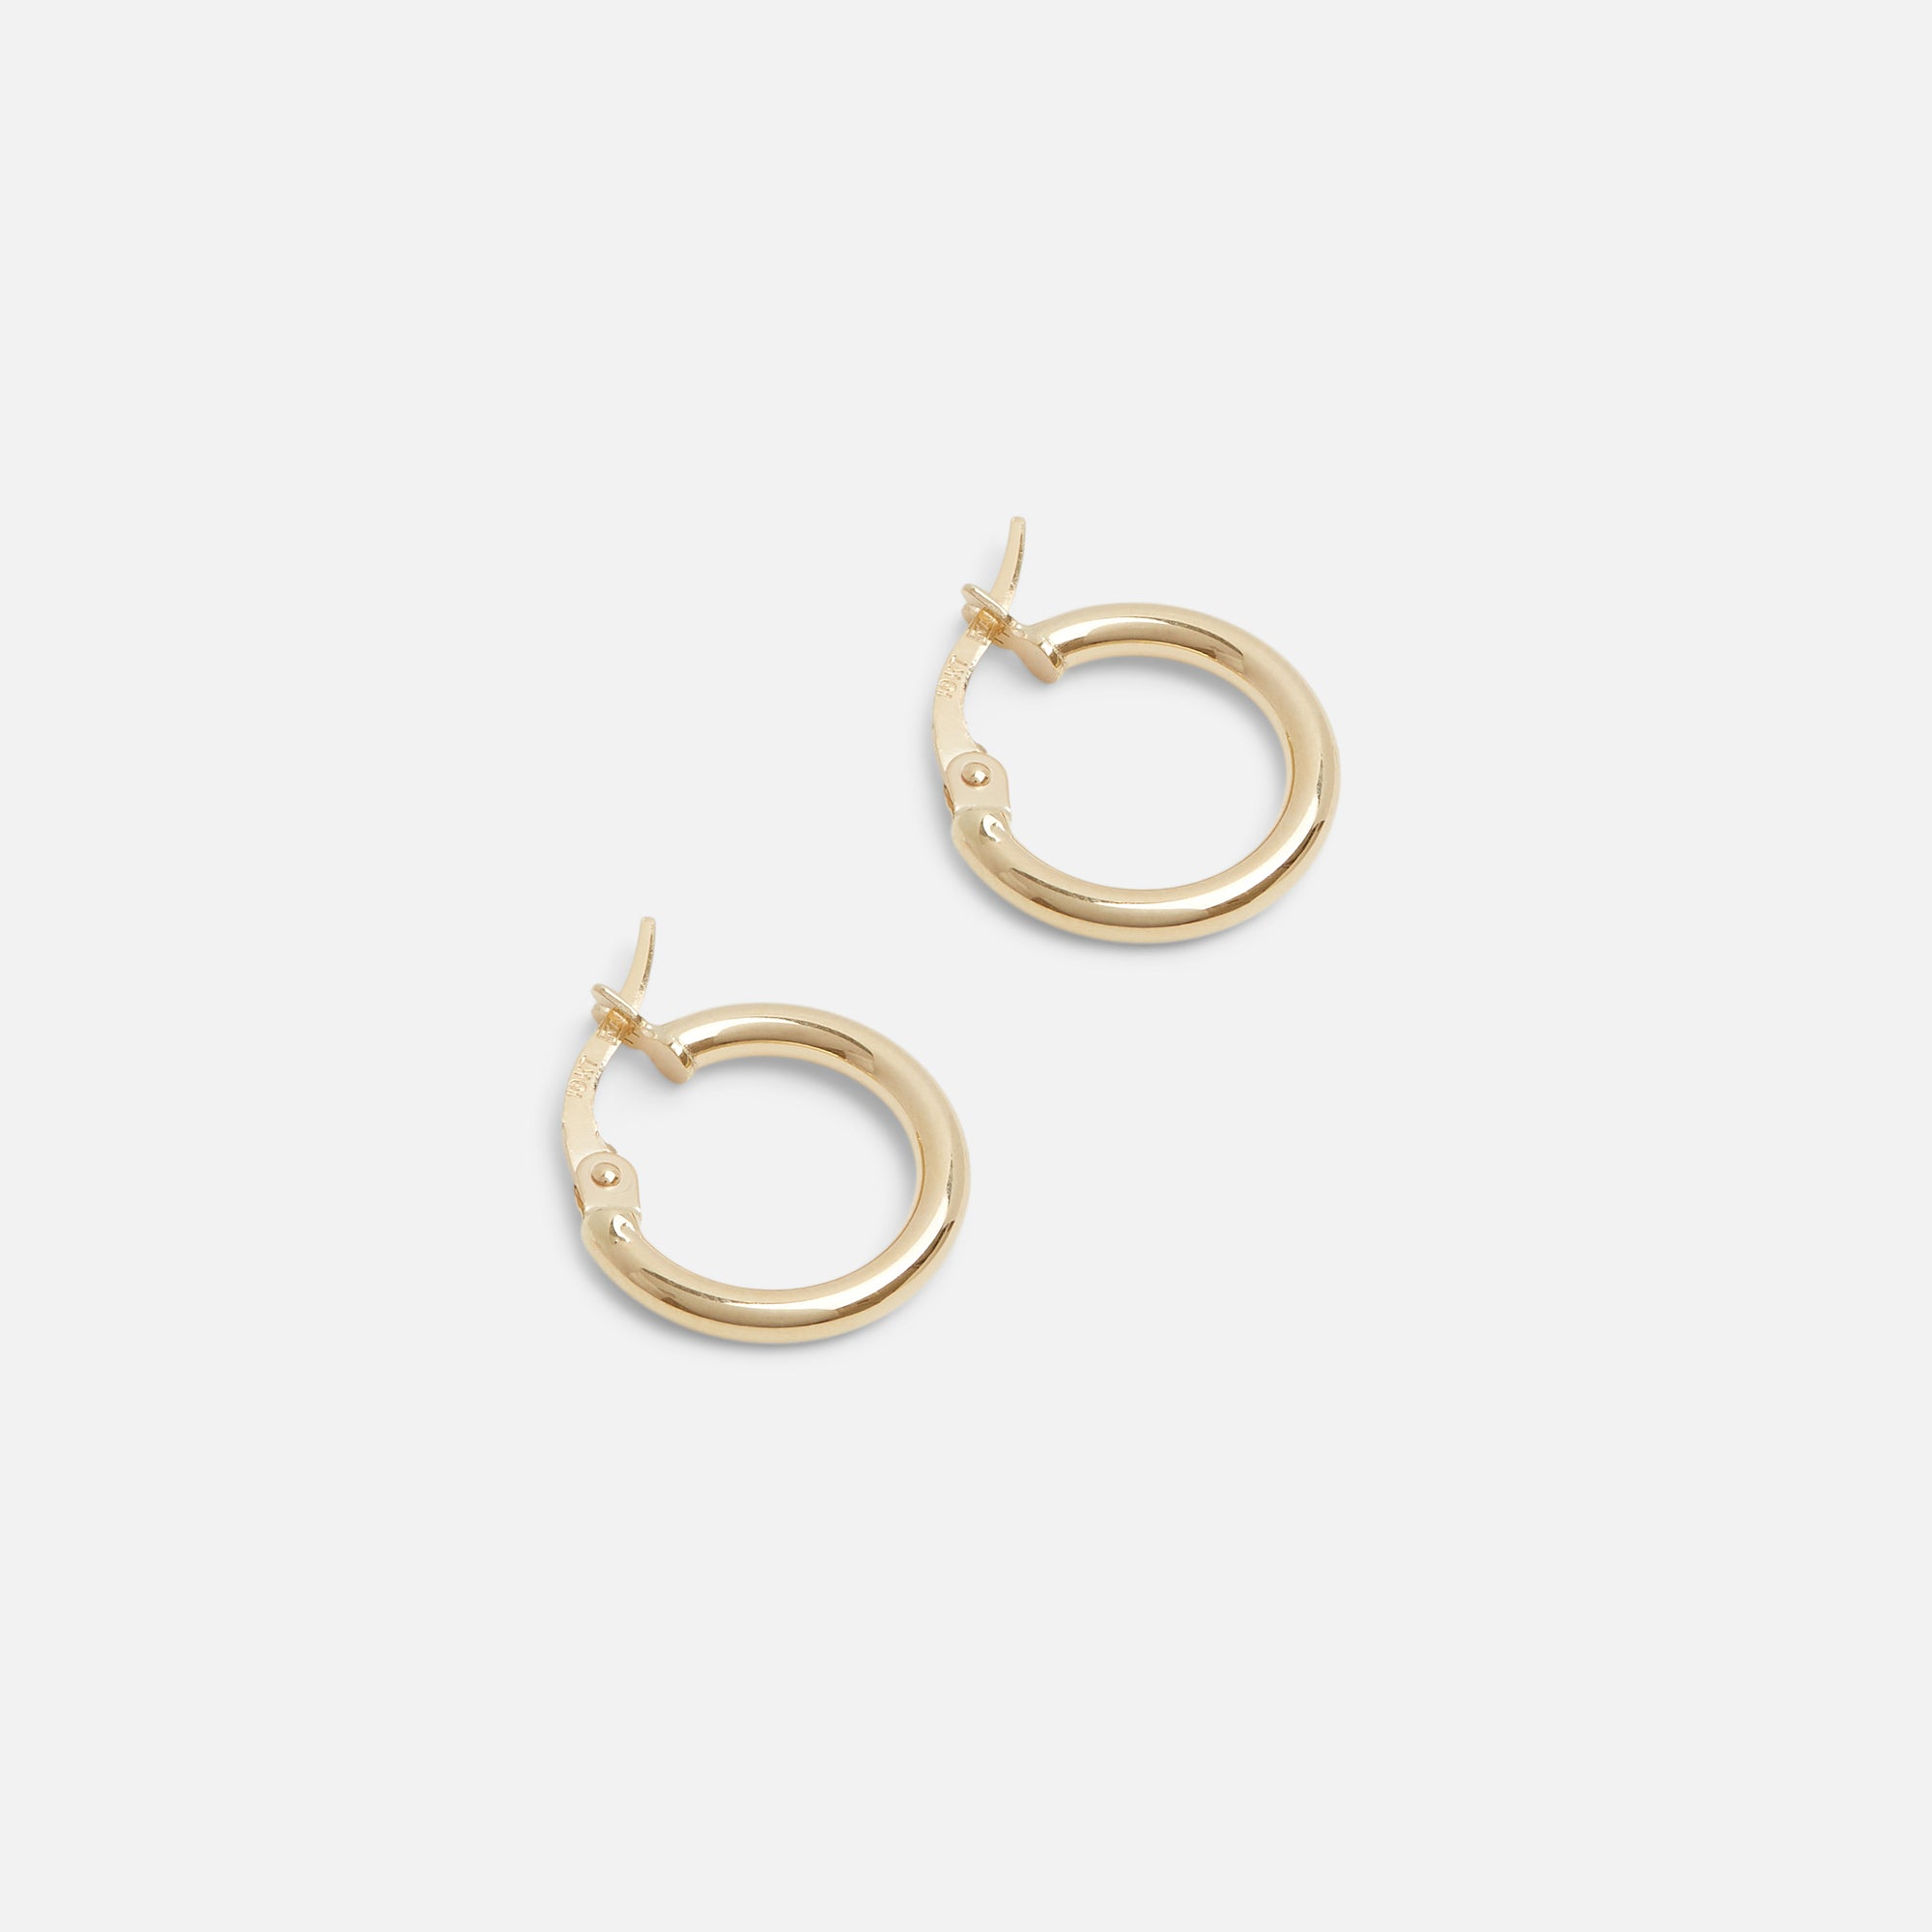 10k yellow gold hoop earrings 13 mm